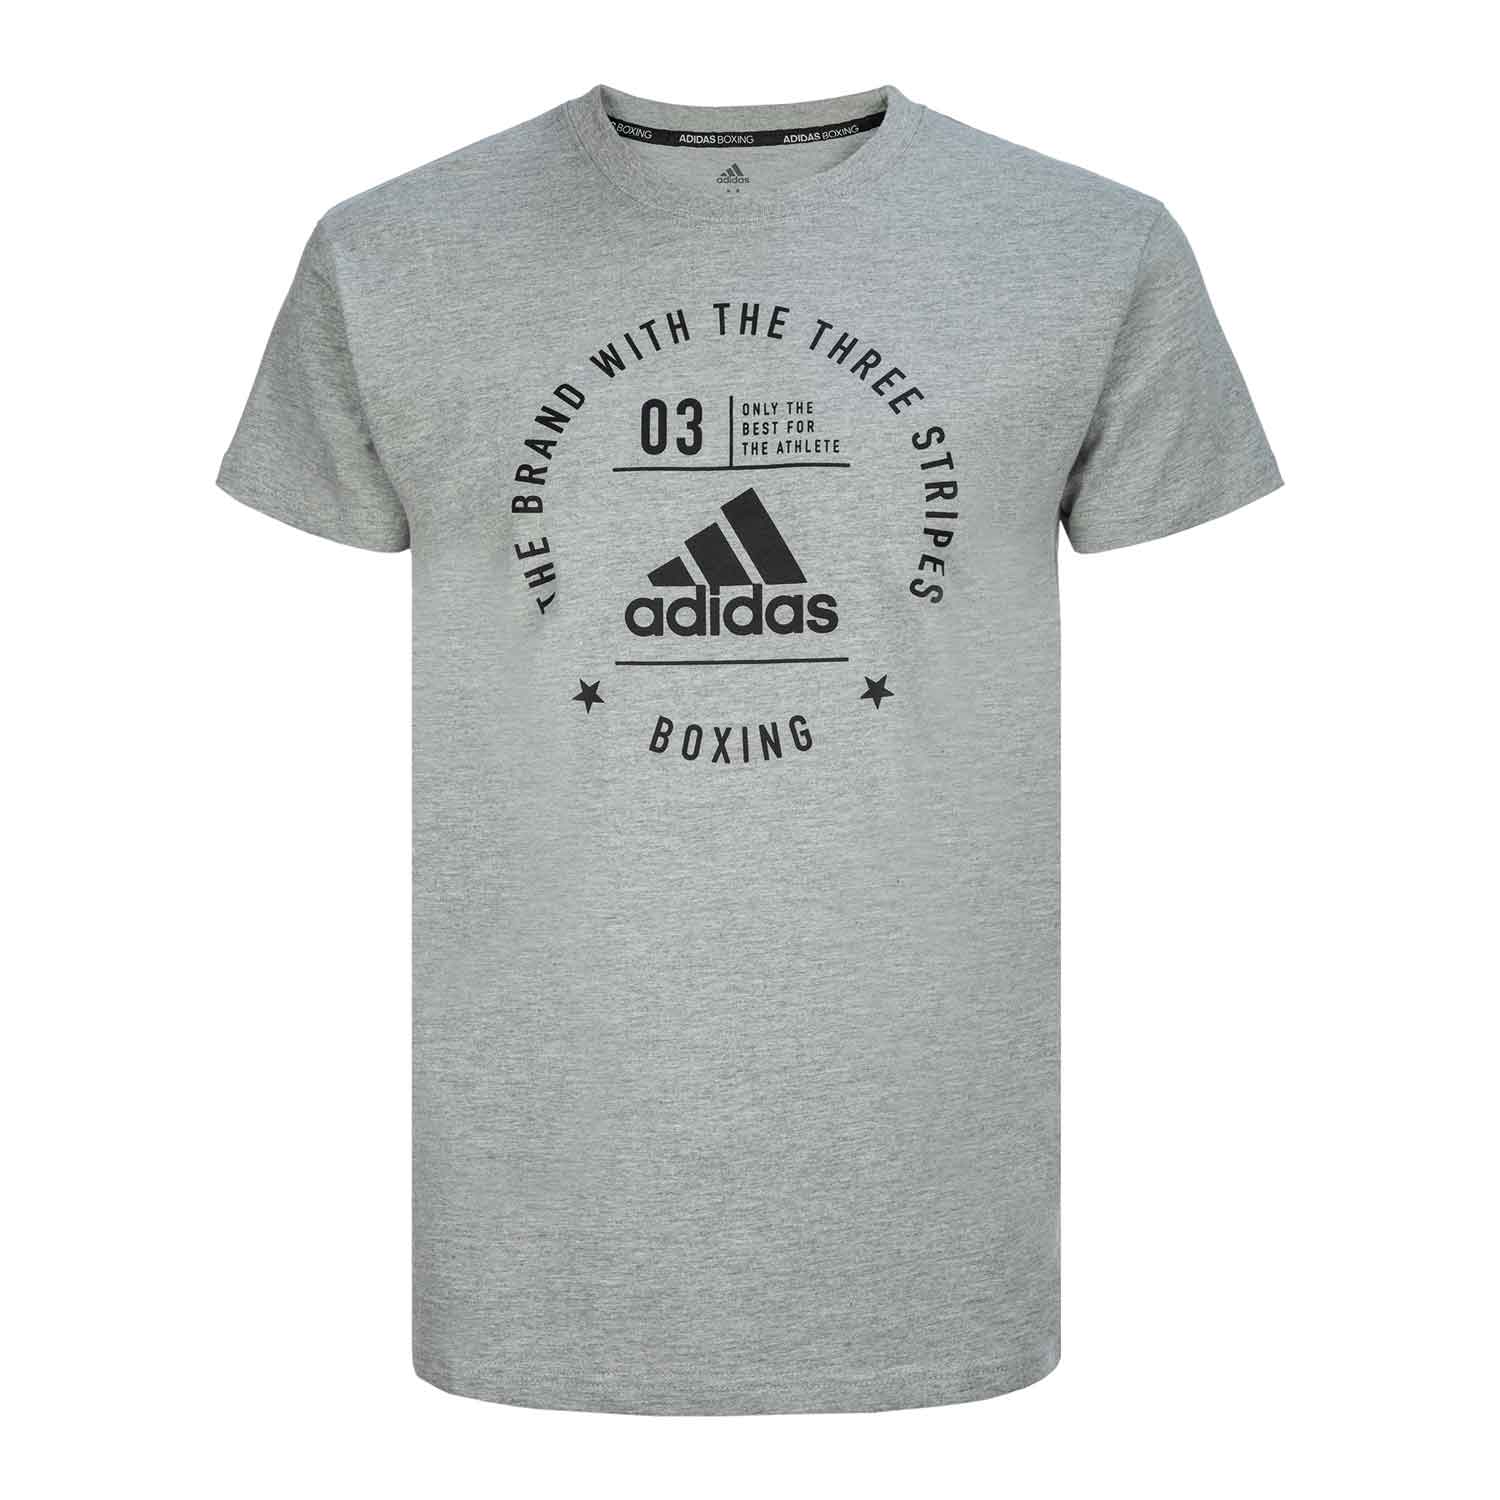 Футболка The Brand With The Three Stripes T-Shirt Boxing серо-черная